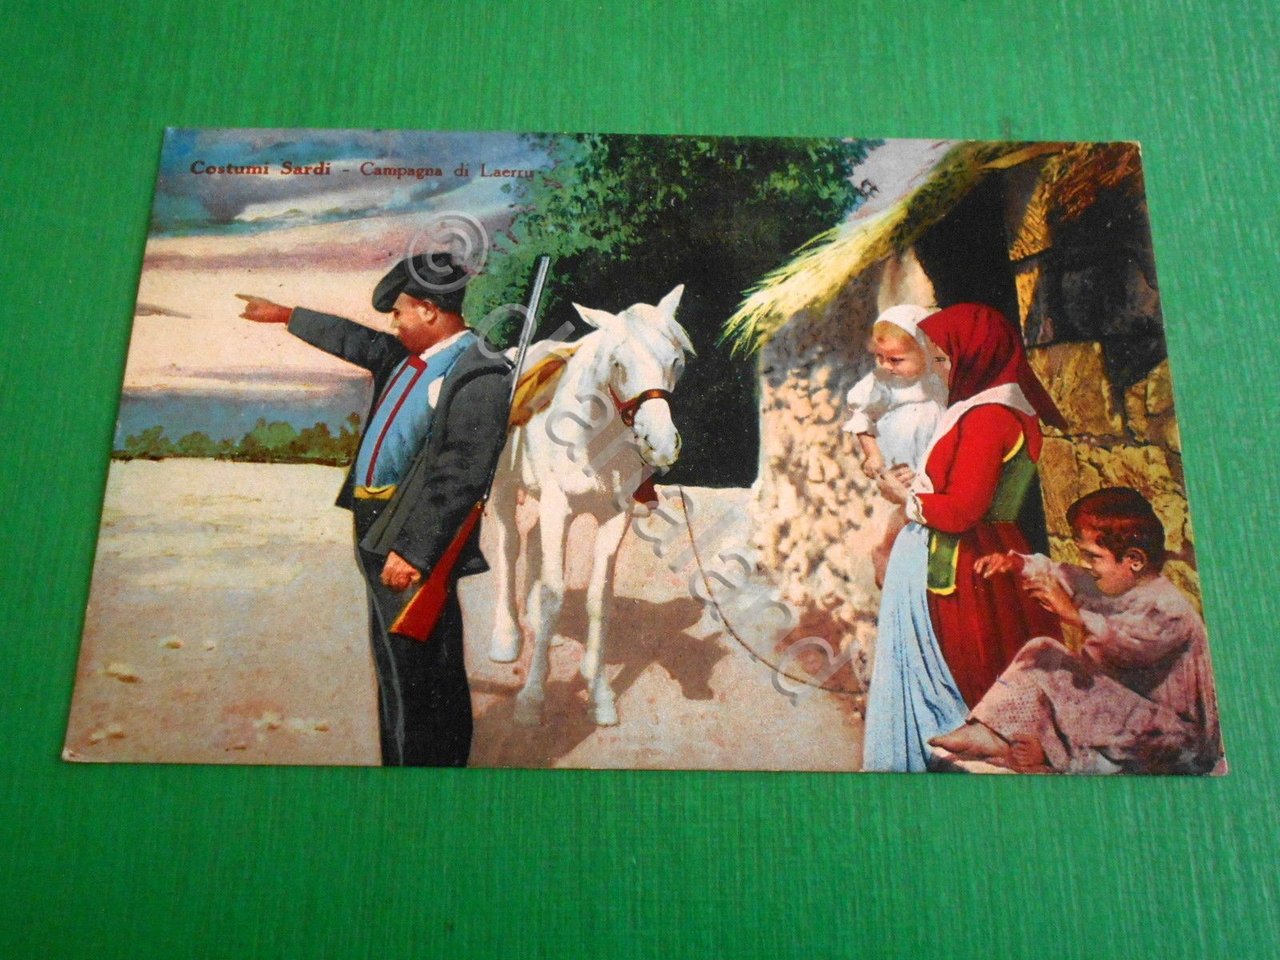 Cartolina Costumi Sardi - Campagna di Laerry 1930 ca.